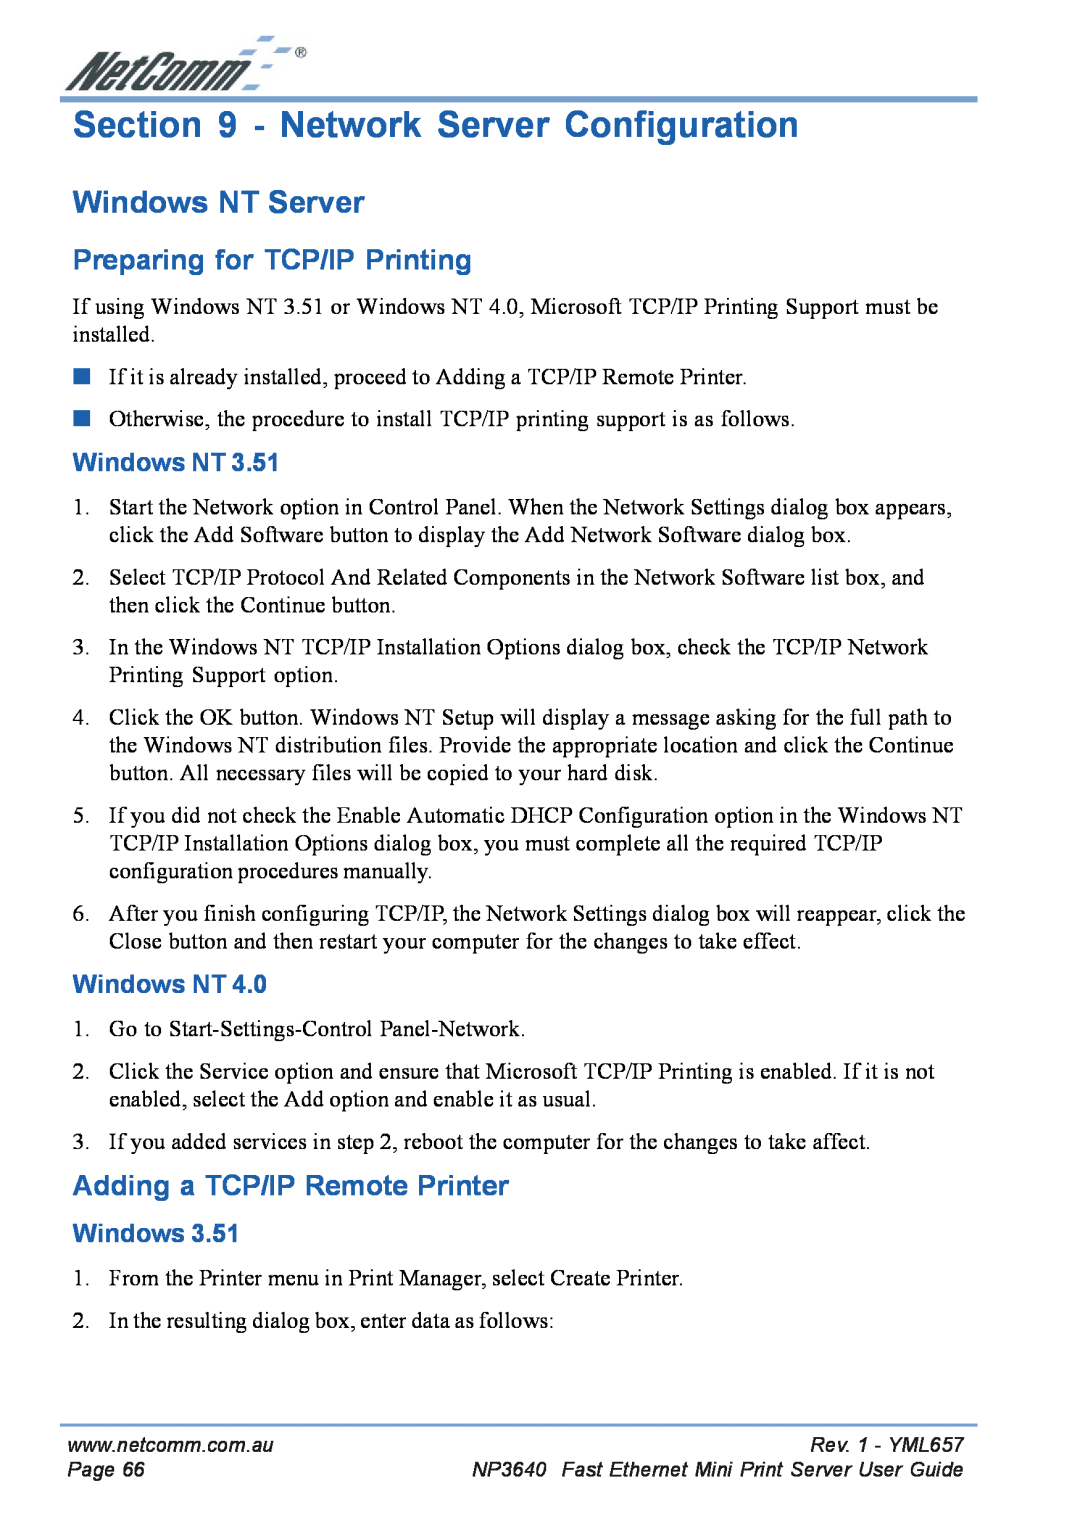 NetComm NP3640 manual Network Server Configuration, Windows NT Server, Preparing for TCP/IP Printing 